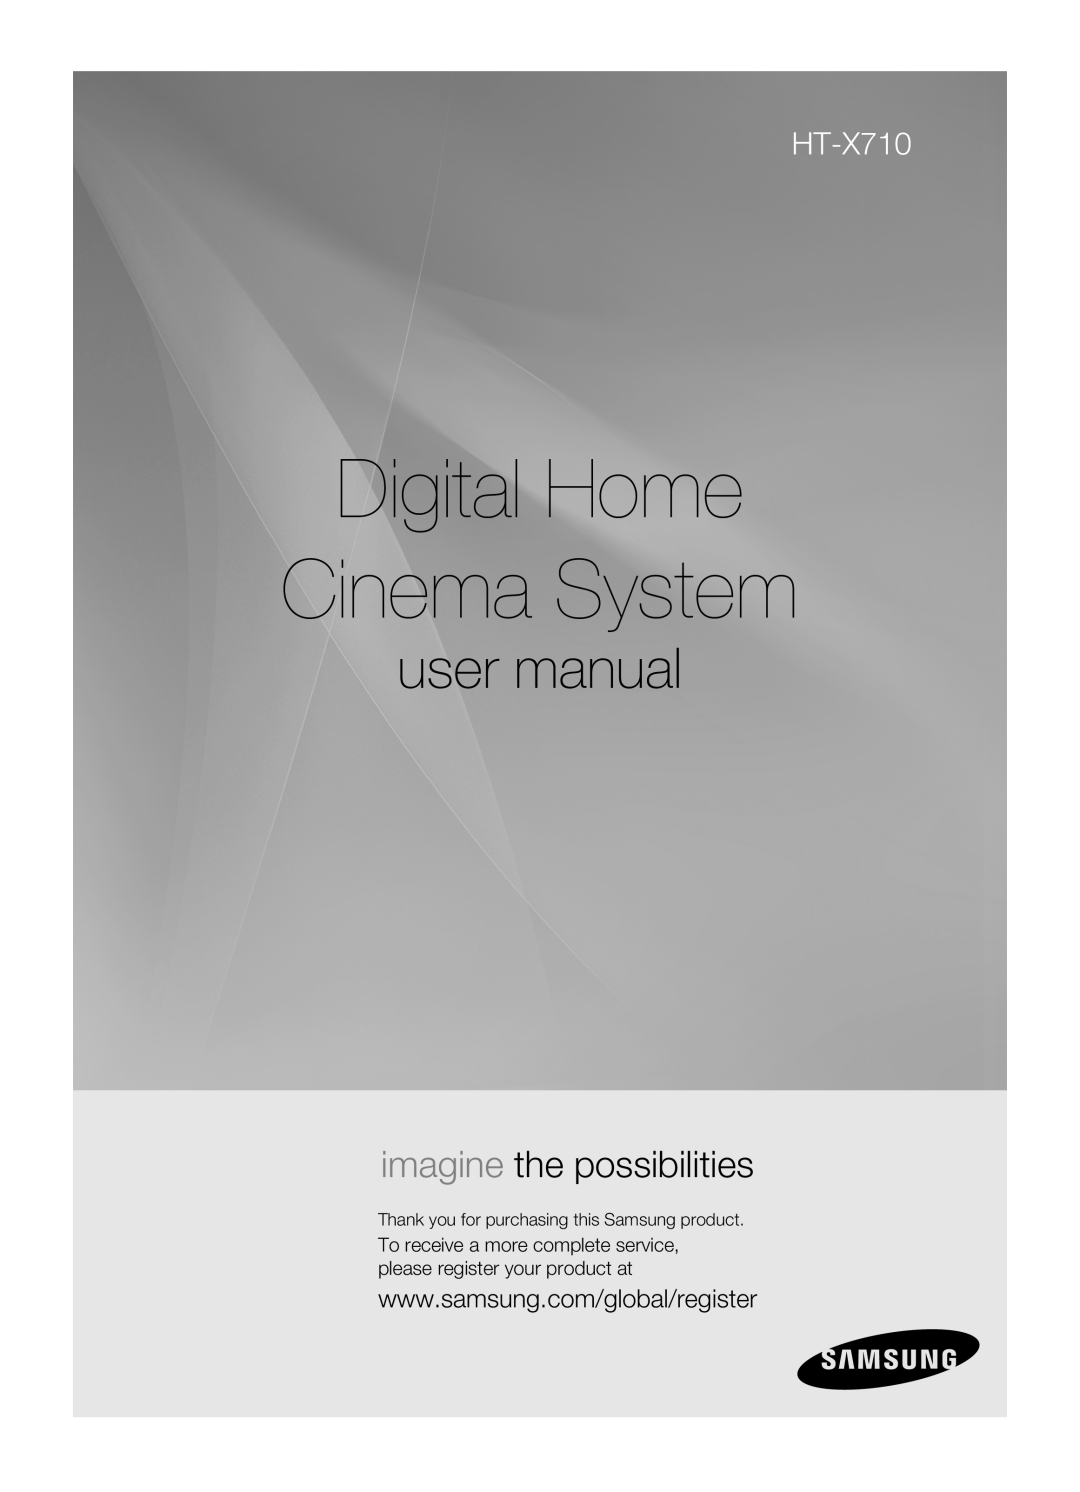 Samsung HT-X710 user manual Digital Home Cinema System, imagine the possibilities 